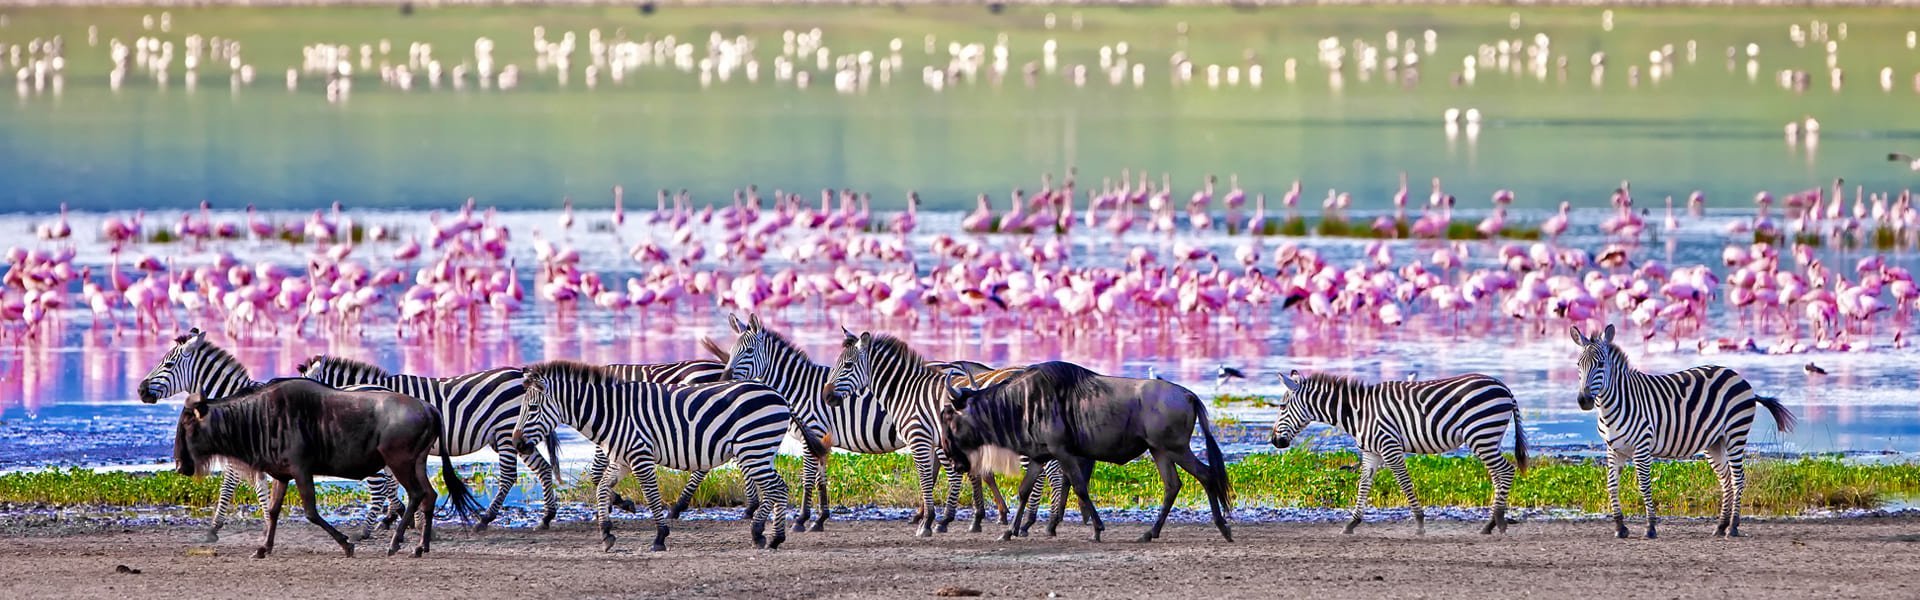 Ngorongoro, Tanzania